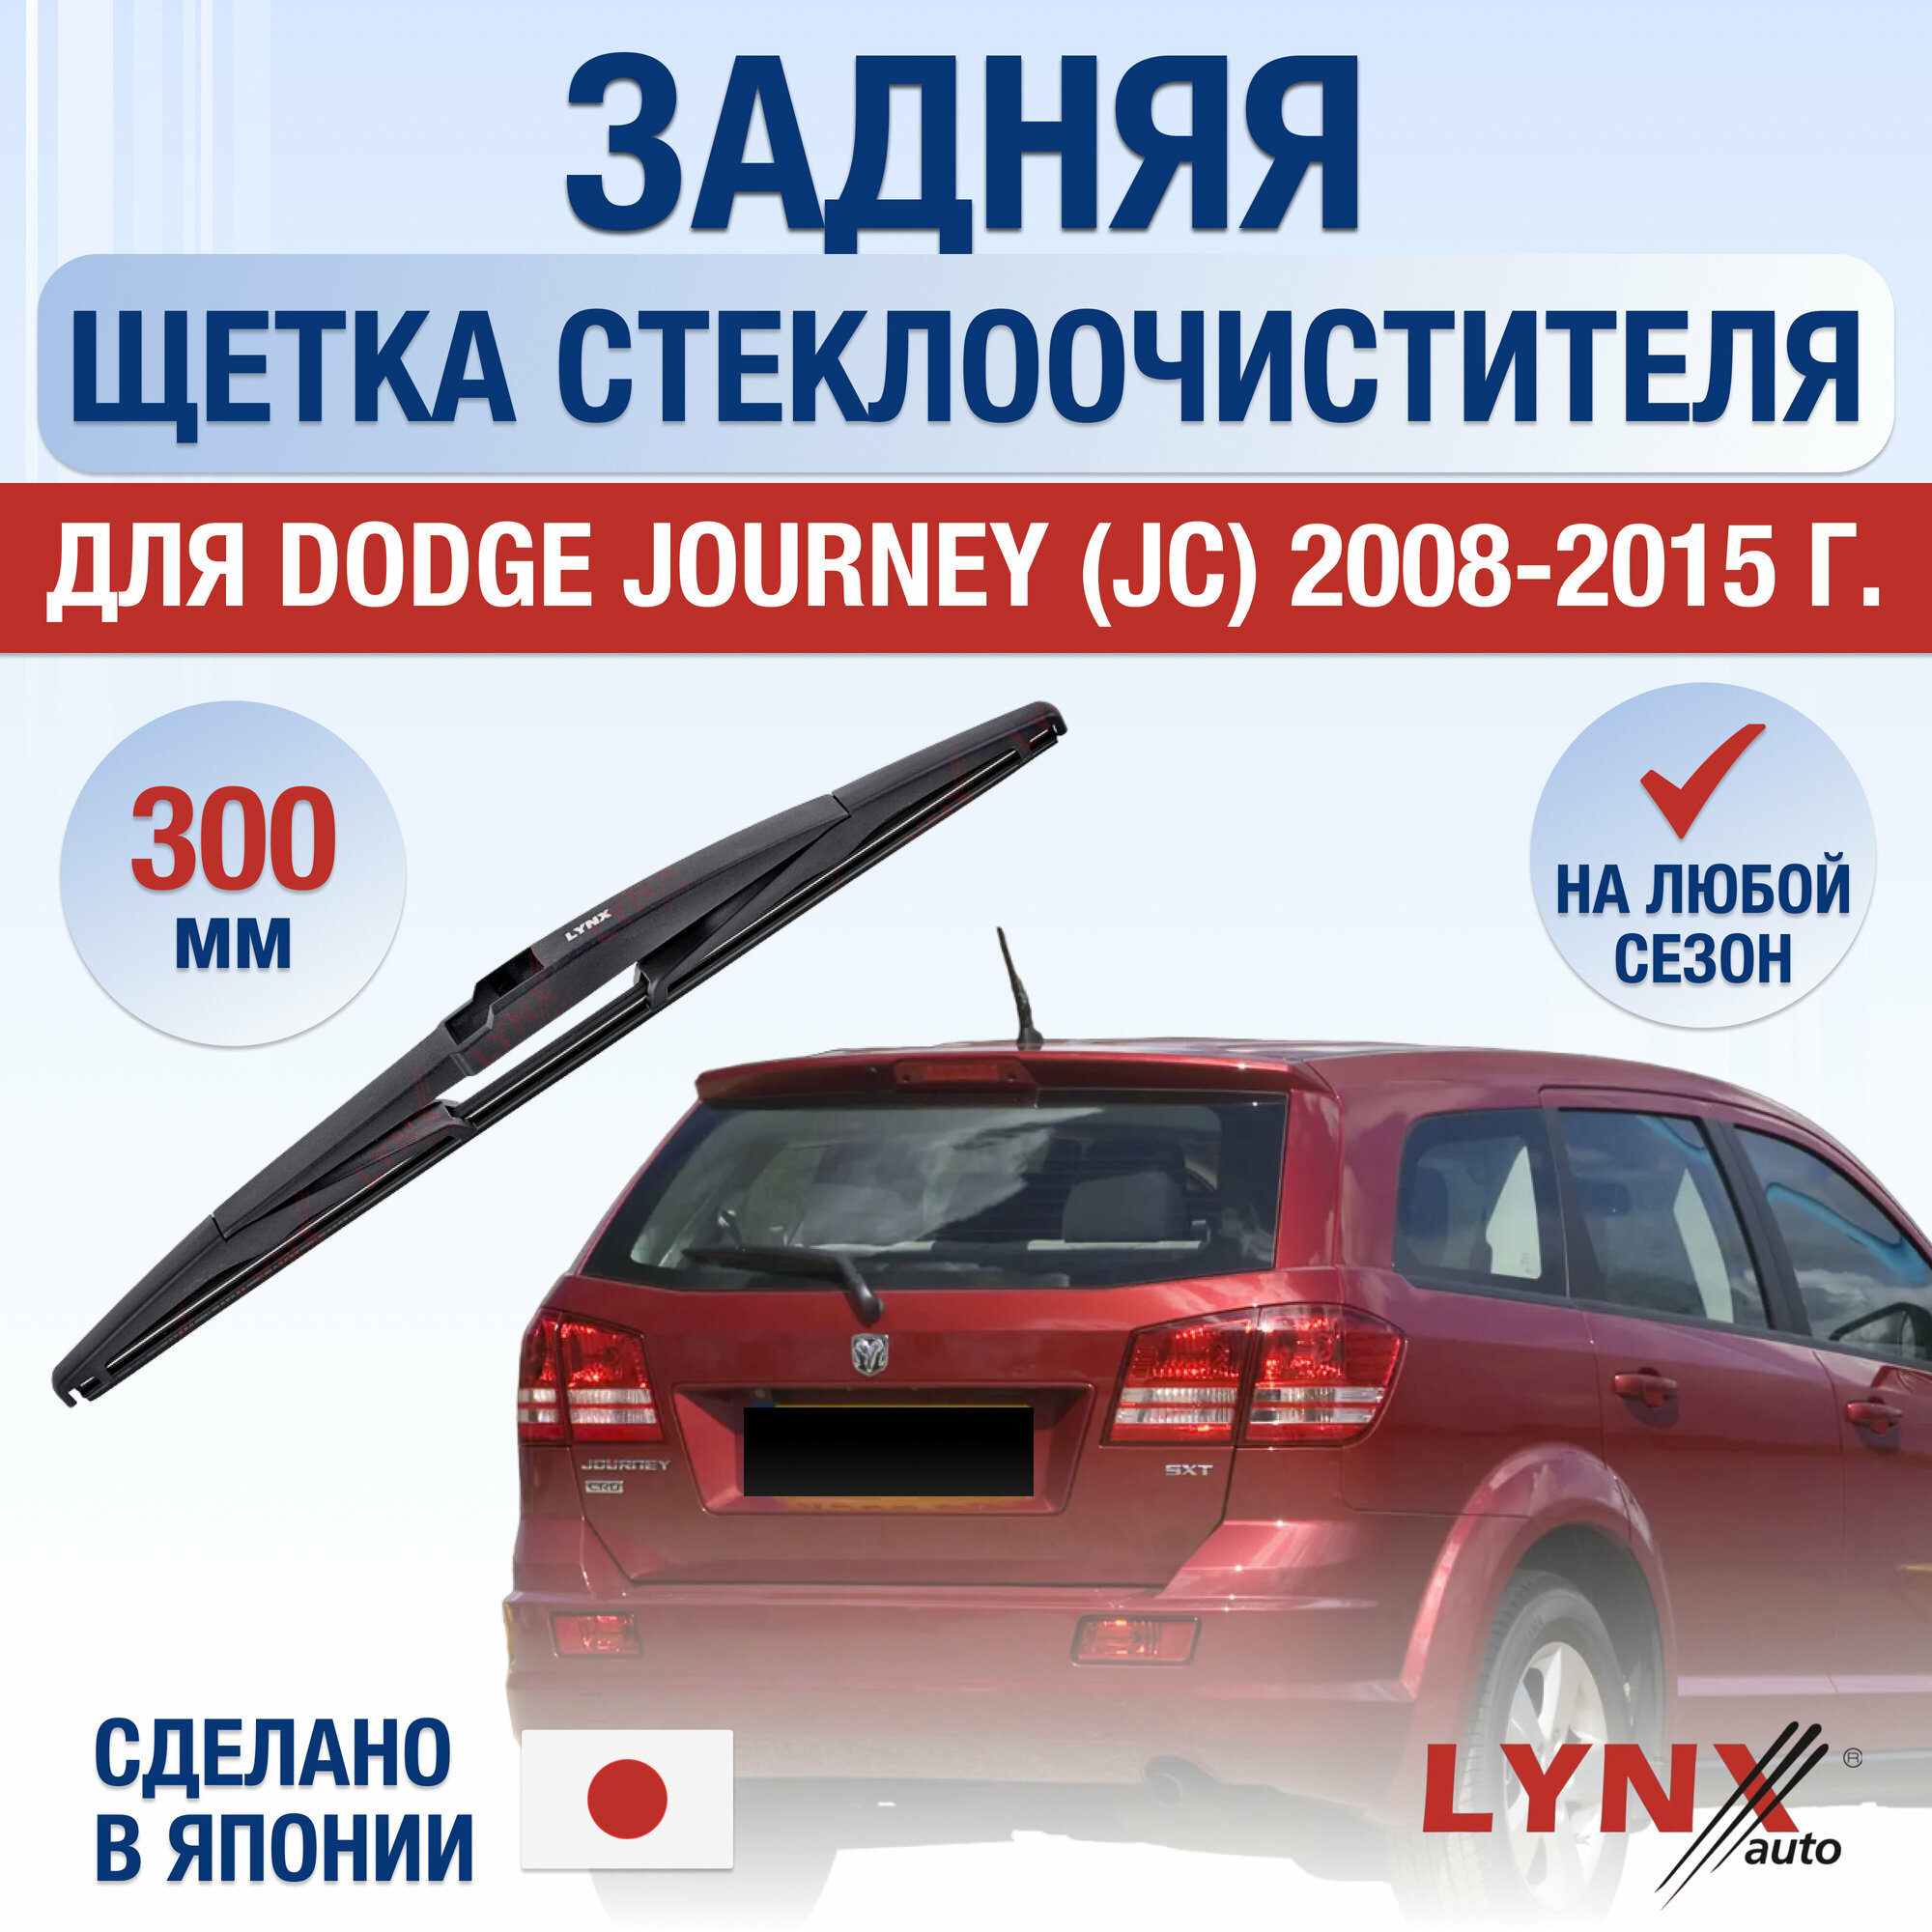 Задняя щетка стеклоочистителя для Dodge Journey (JC) / 2008 2009 2010 2011 2012 2013 2014 2015 / Задний дворник 300 мм Додж Джорни